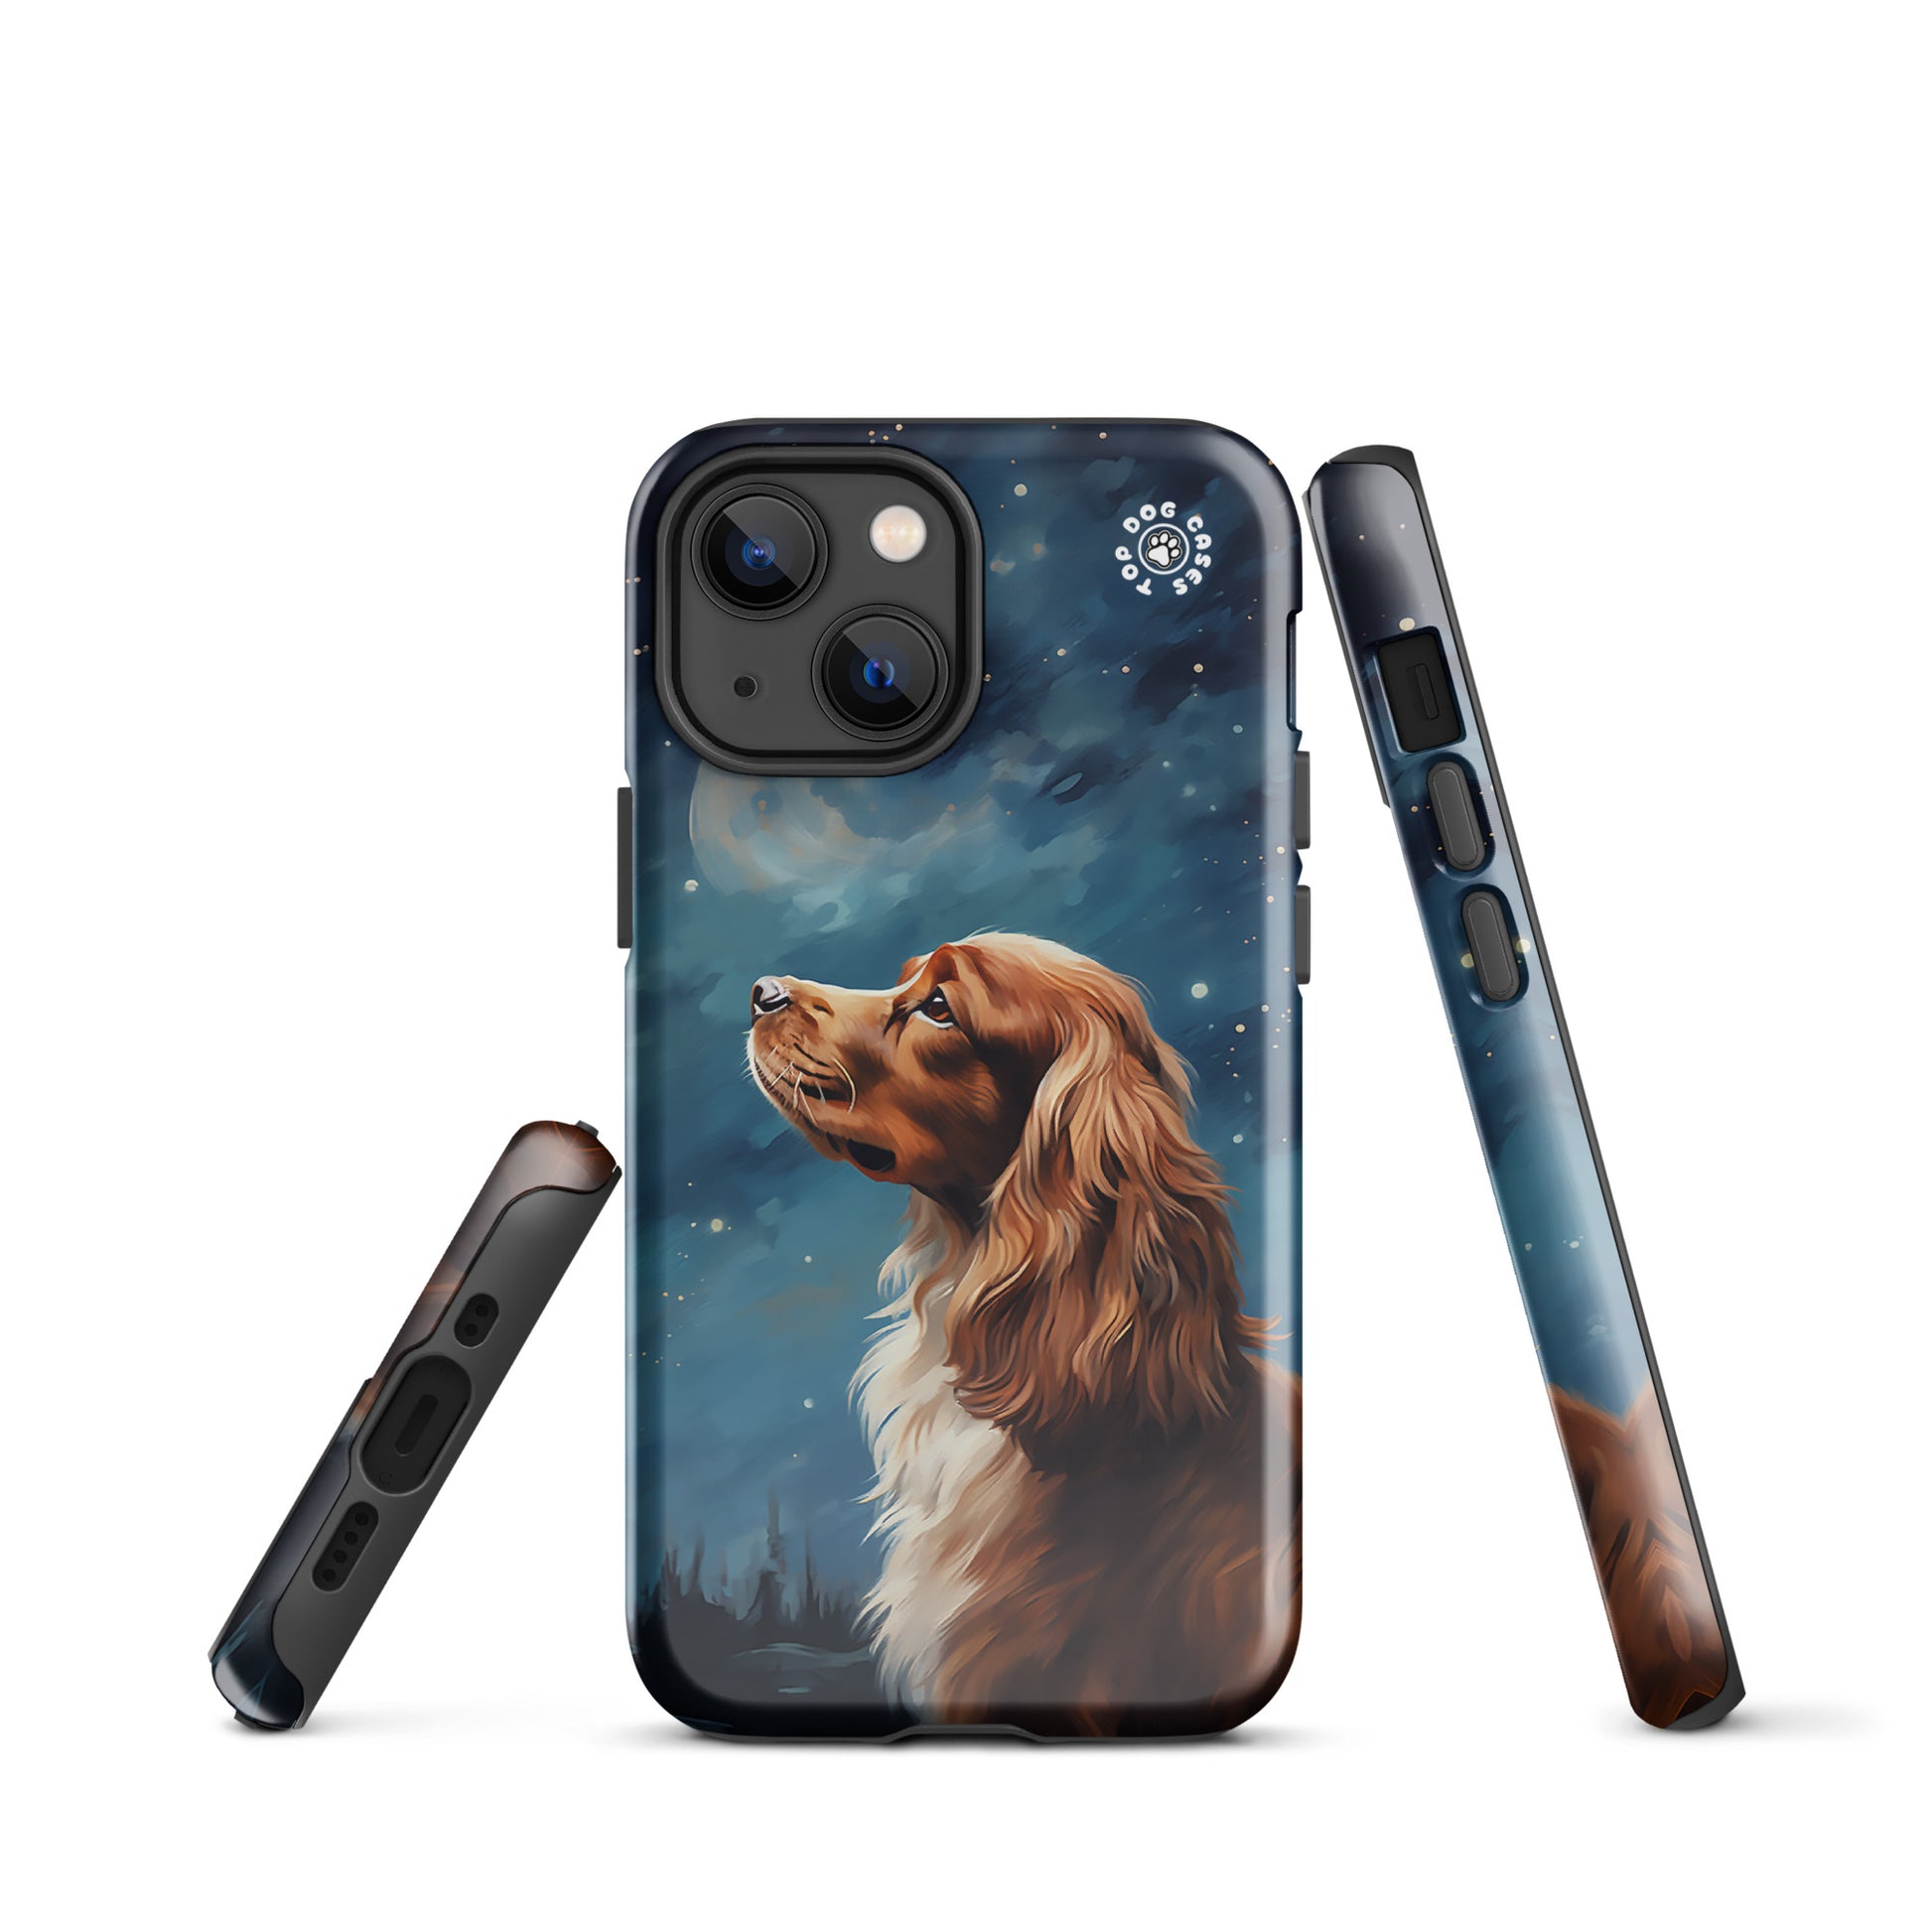 Cocker Spaniel - iPhone 13 Case - Cute Phone Cases - Top Dog Cases - #Cocker Spaniel, #CockerSpaniel, #CuteDog, #CuteDogs, #CutePhoneCases, #DogPhoneCase, #iPhone13, #iPhone13case, #iPhone13DogCase, #iPhone13Mini, #iPhone13Pro, #iPhone13ProMax